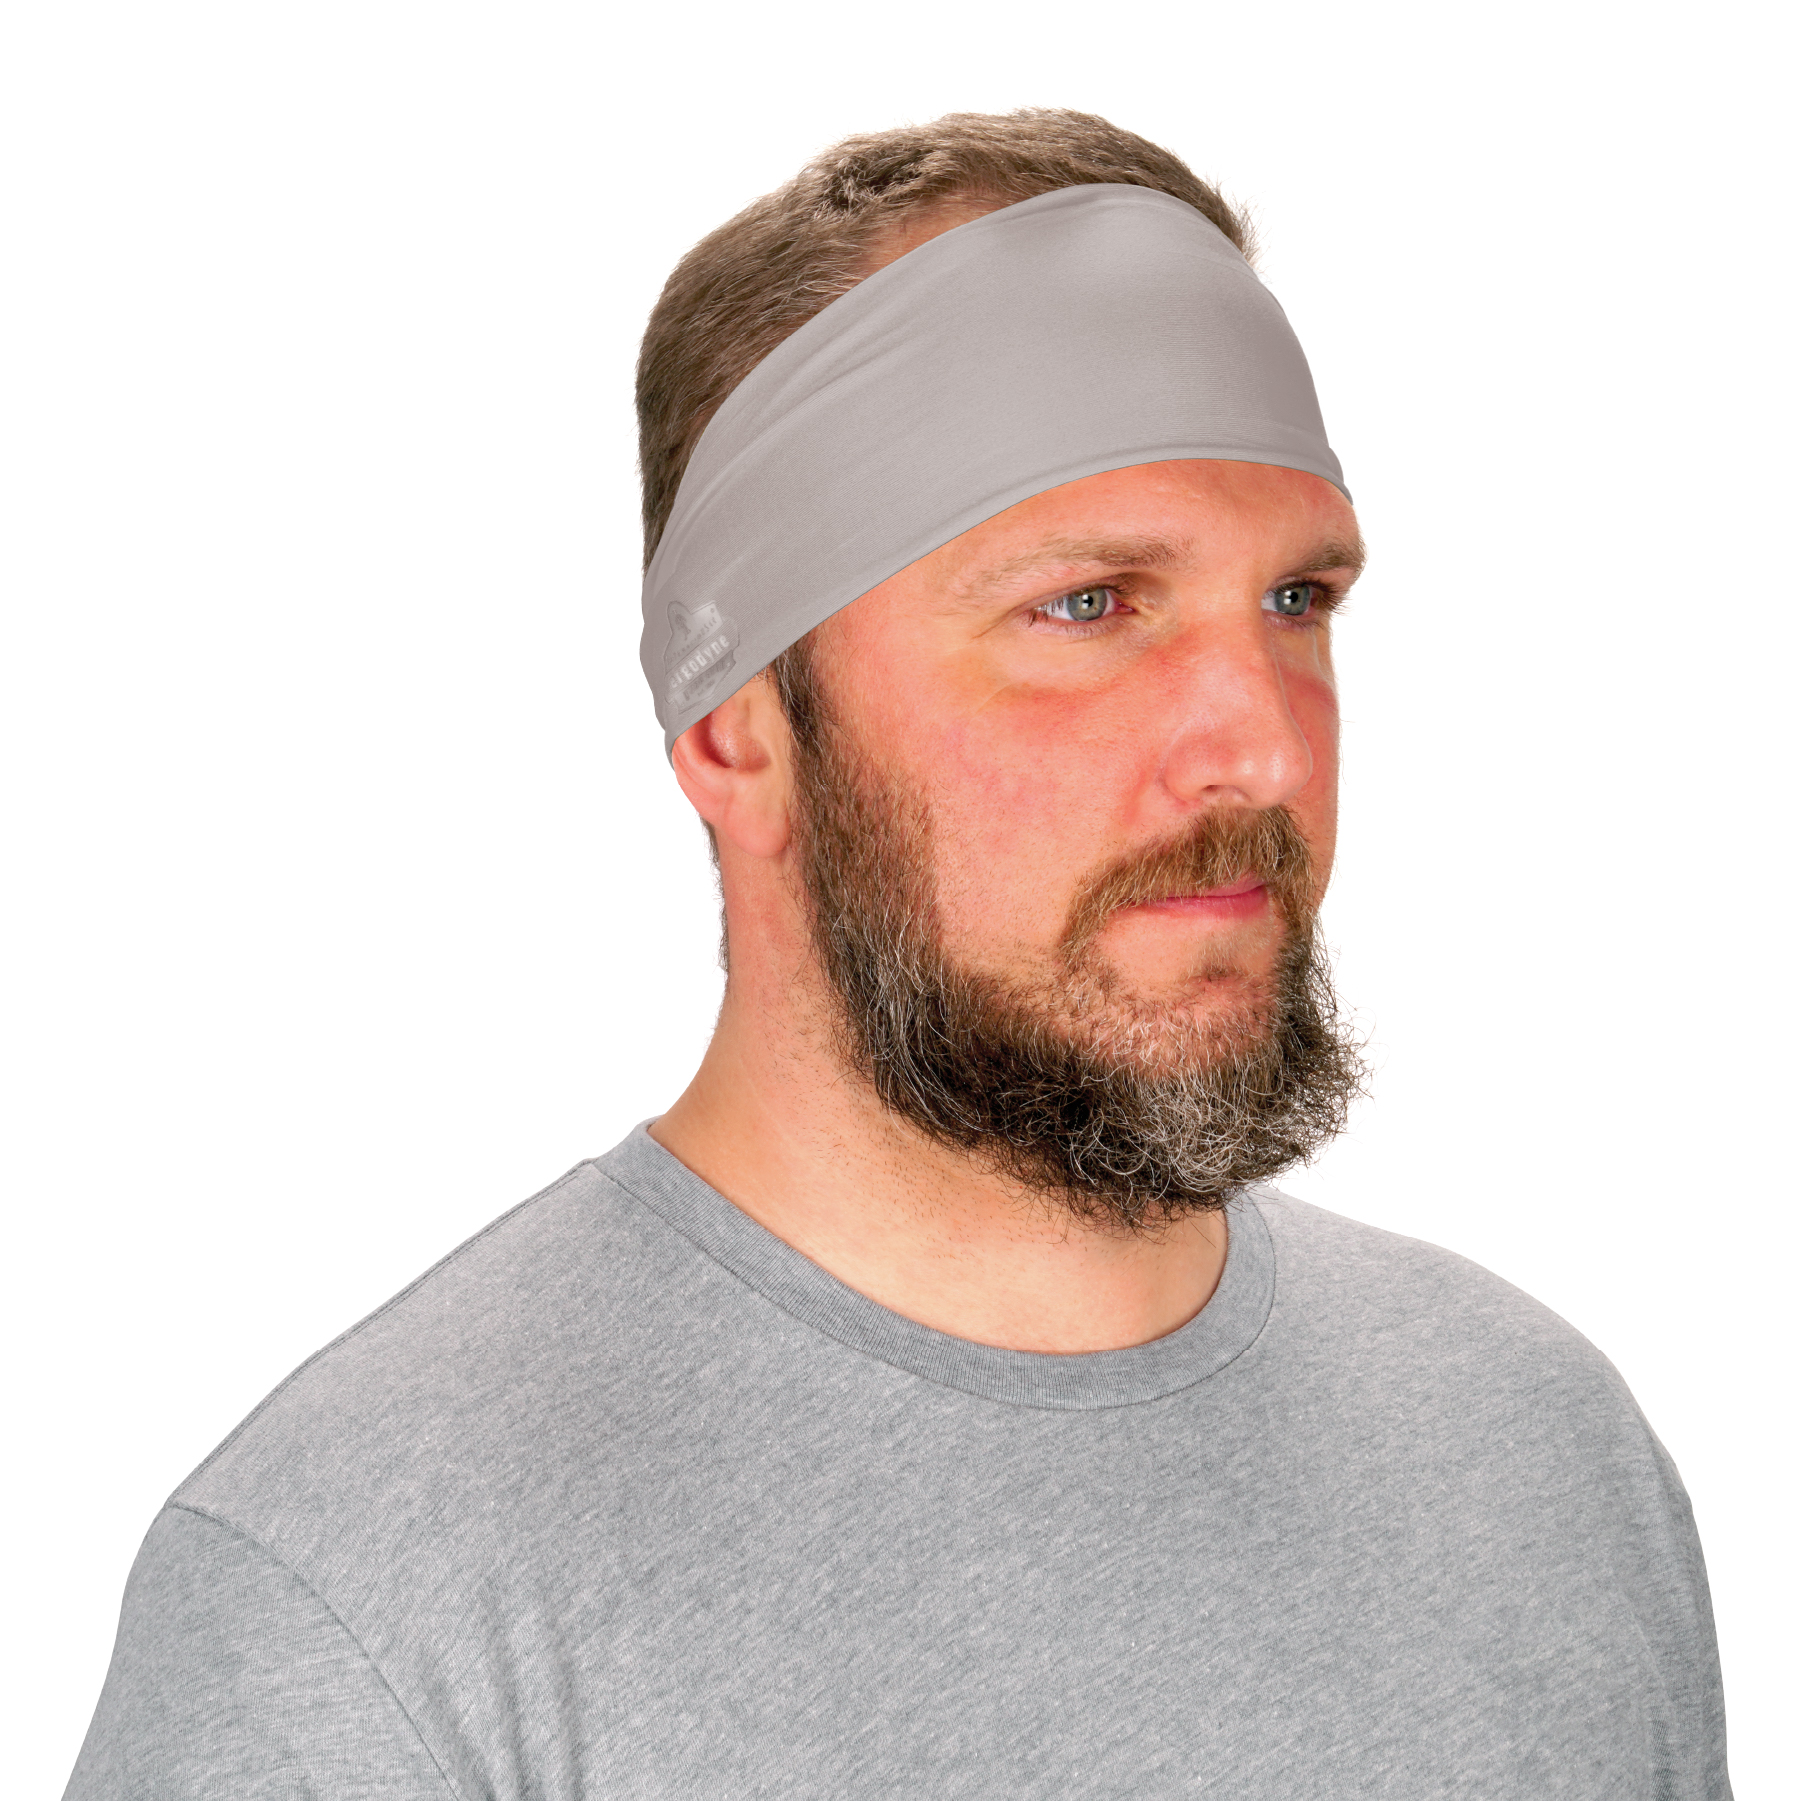 Ergodyne Chill Its 6634 Cooling Headband, Sports Headbands for Men and Women